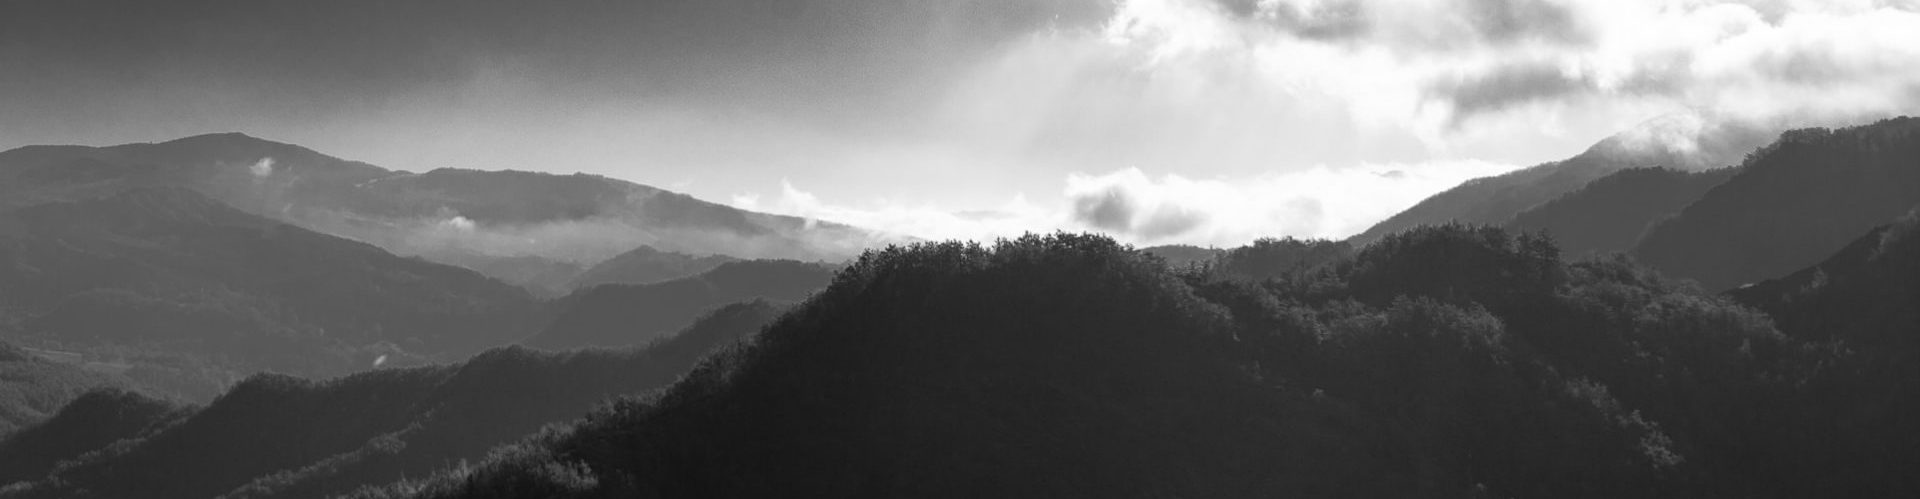 Black and white mountain image